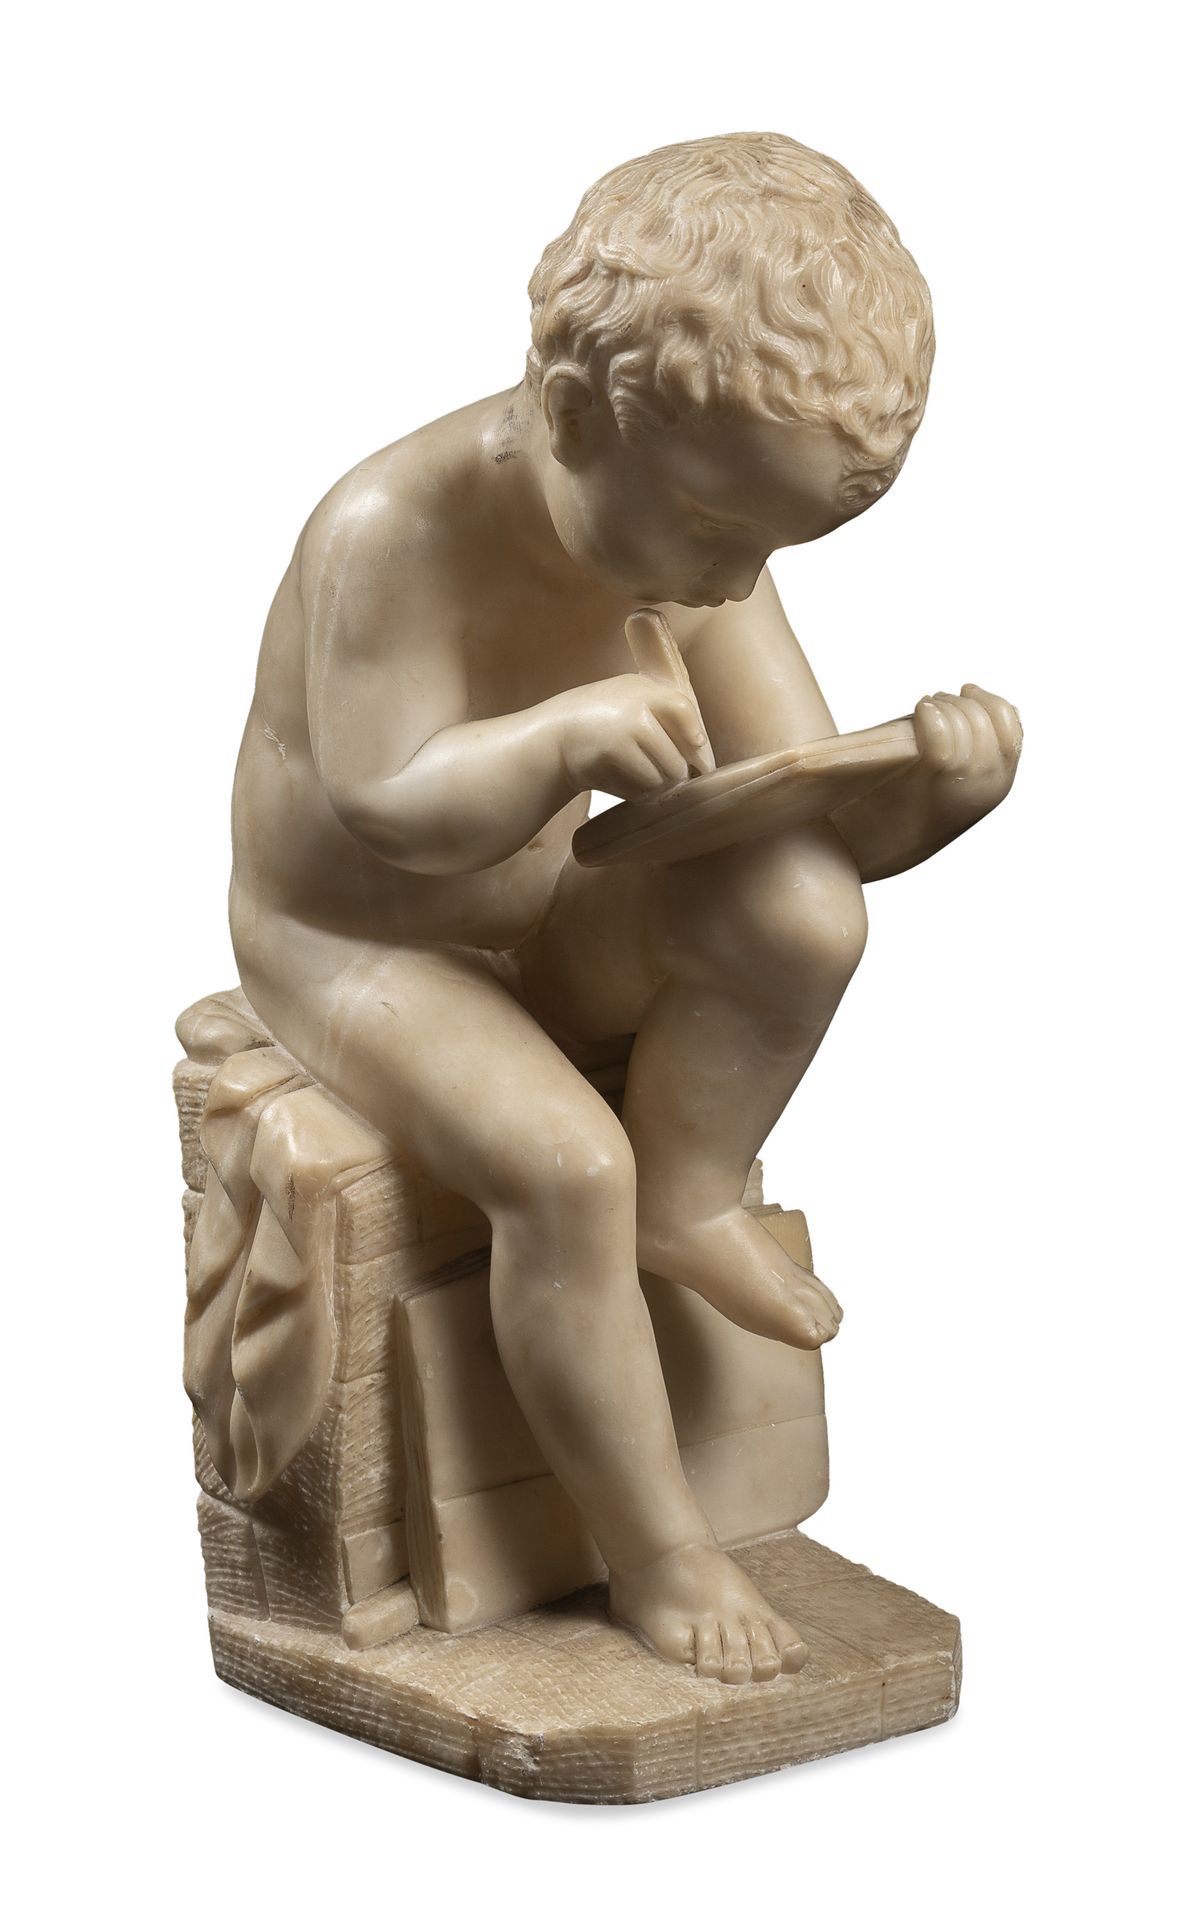 Null 意大利雕塑家，20世纪初



学生放学

石膏雕塑，cm. 44 x 19 x 16

修缮